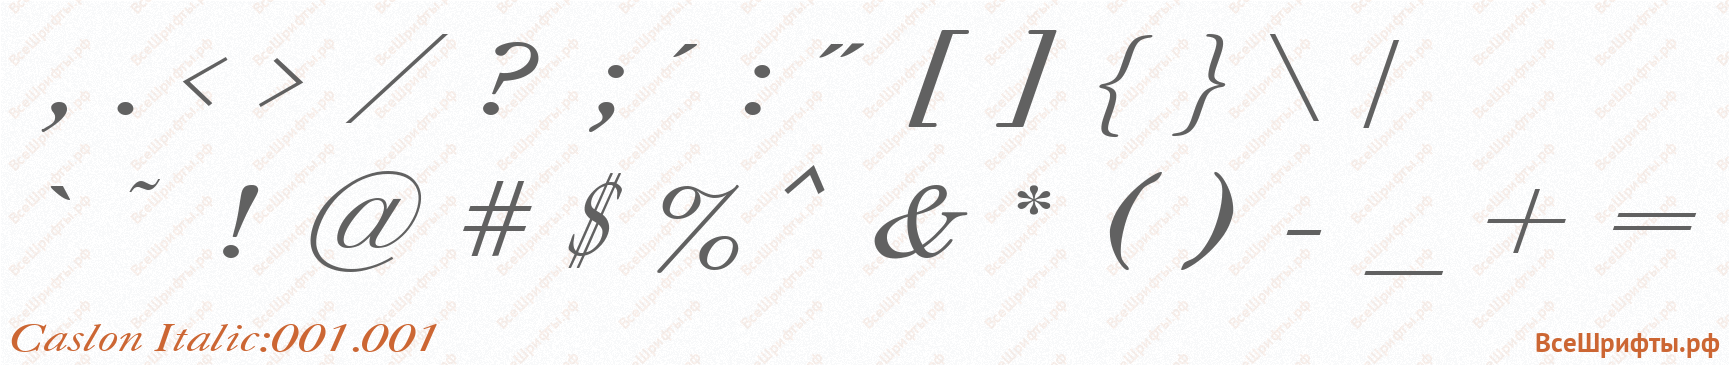 Шрифт Caslon Italic:001.001 со знаками препинания и пунктуации